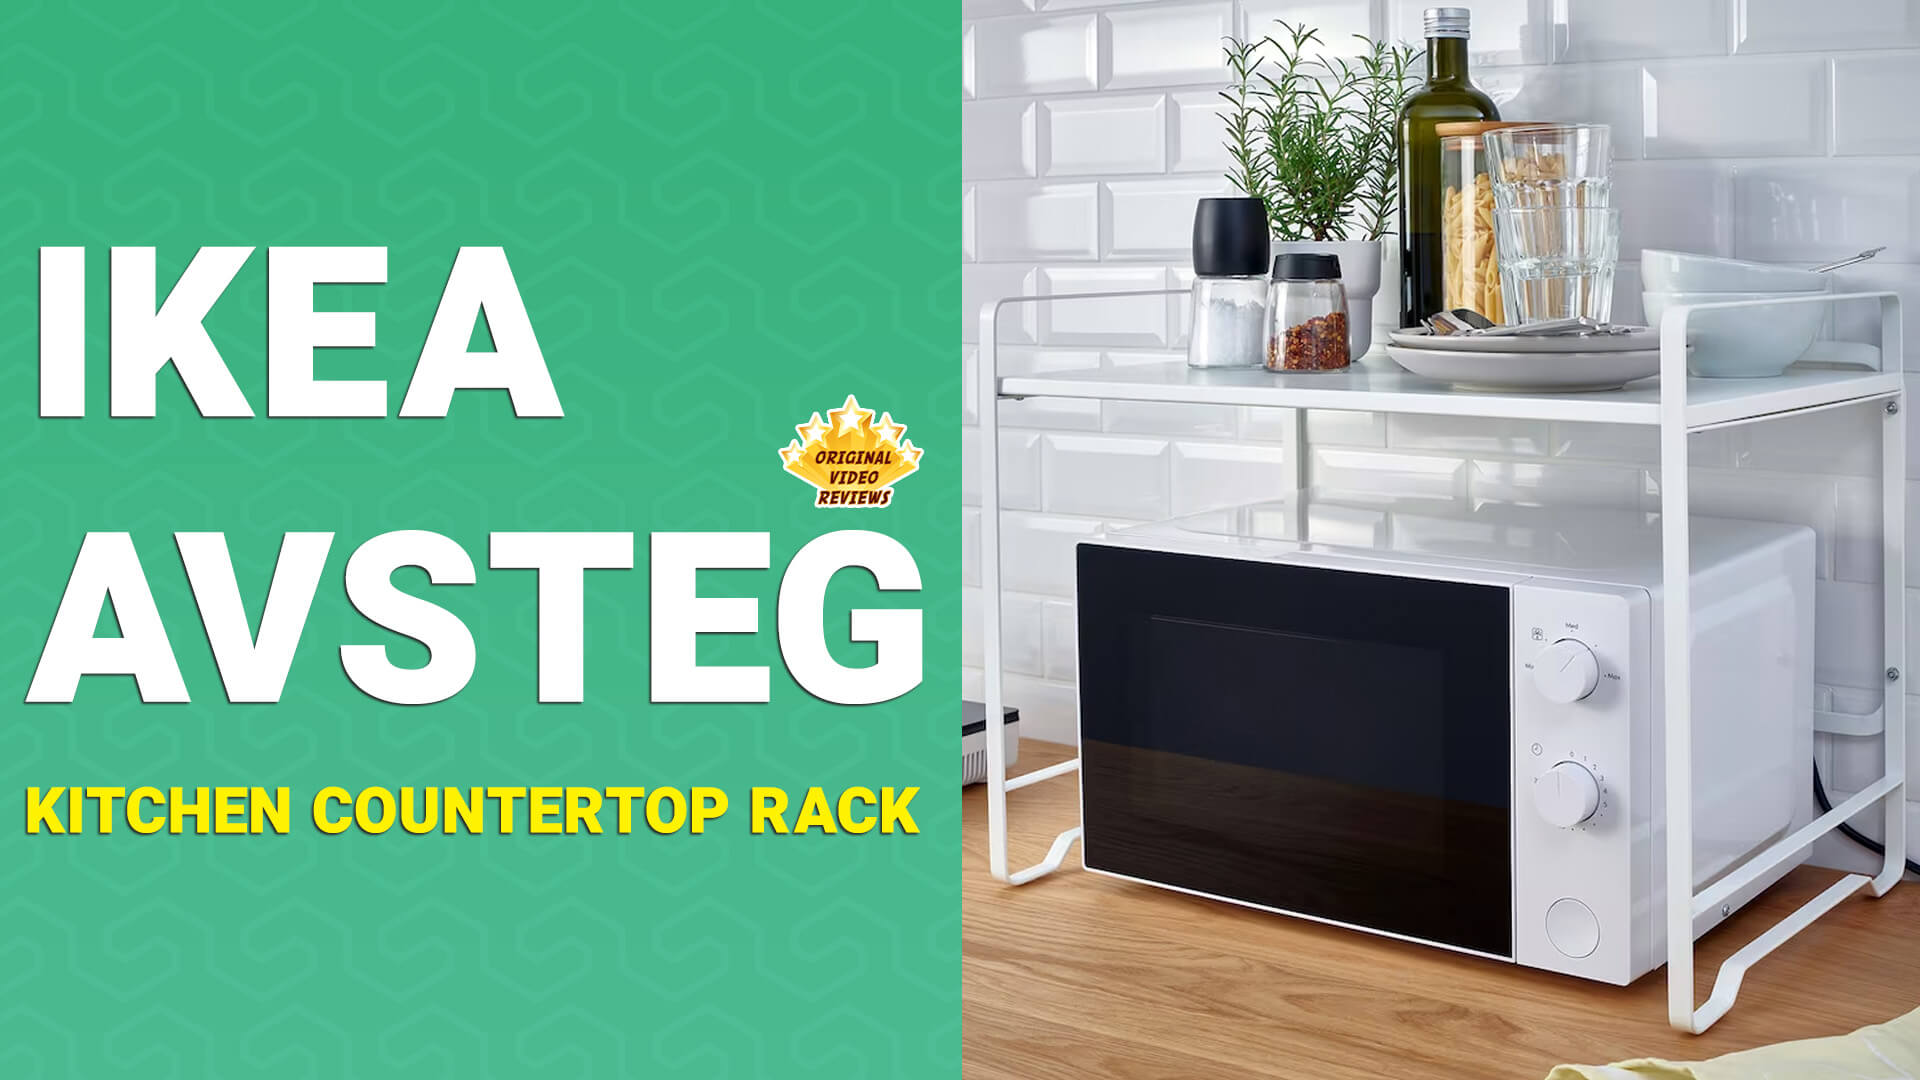 IKEA AVSTEG Kitchen countertop rack Review (Thumbnail)